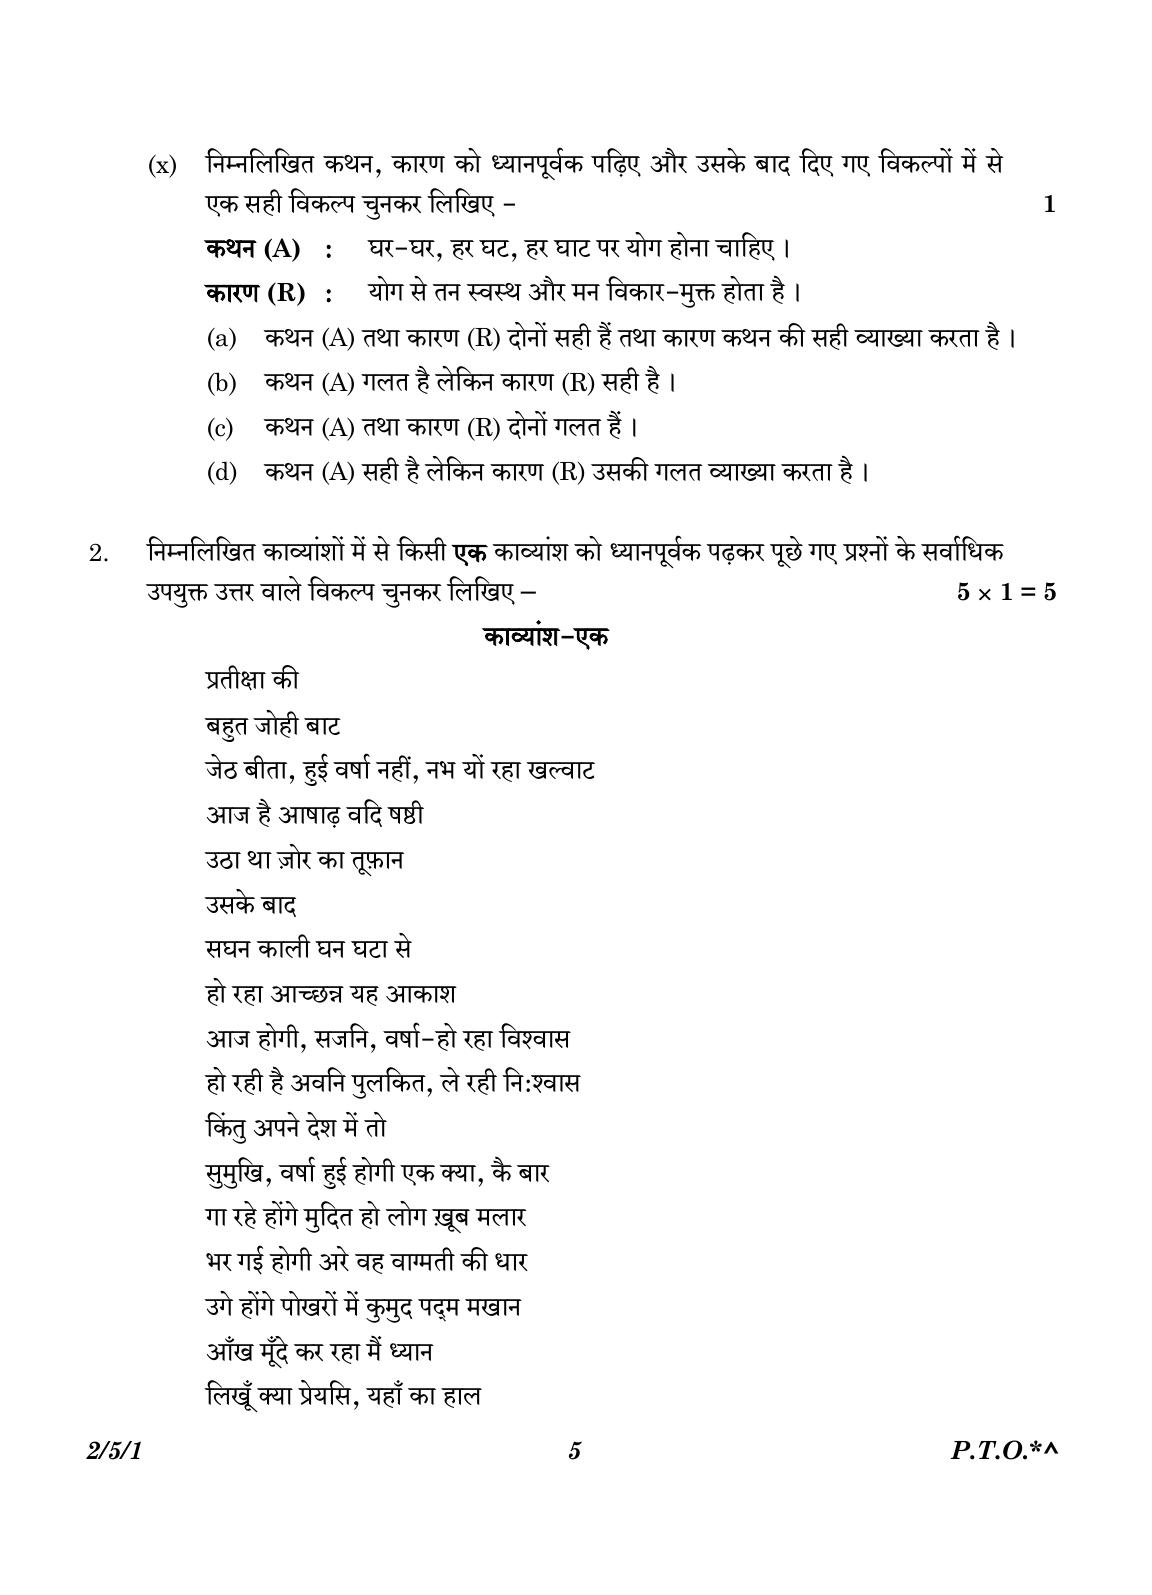 CBSE Class 12 2-5-1 Hindi Core version 2023 Question Paper - Page 5